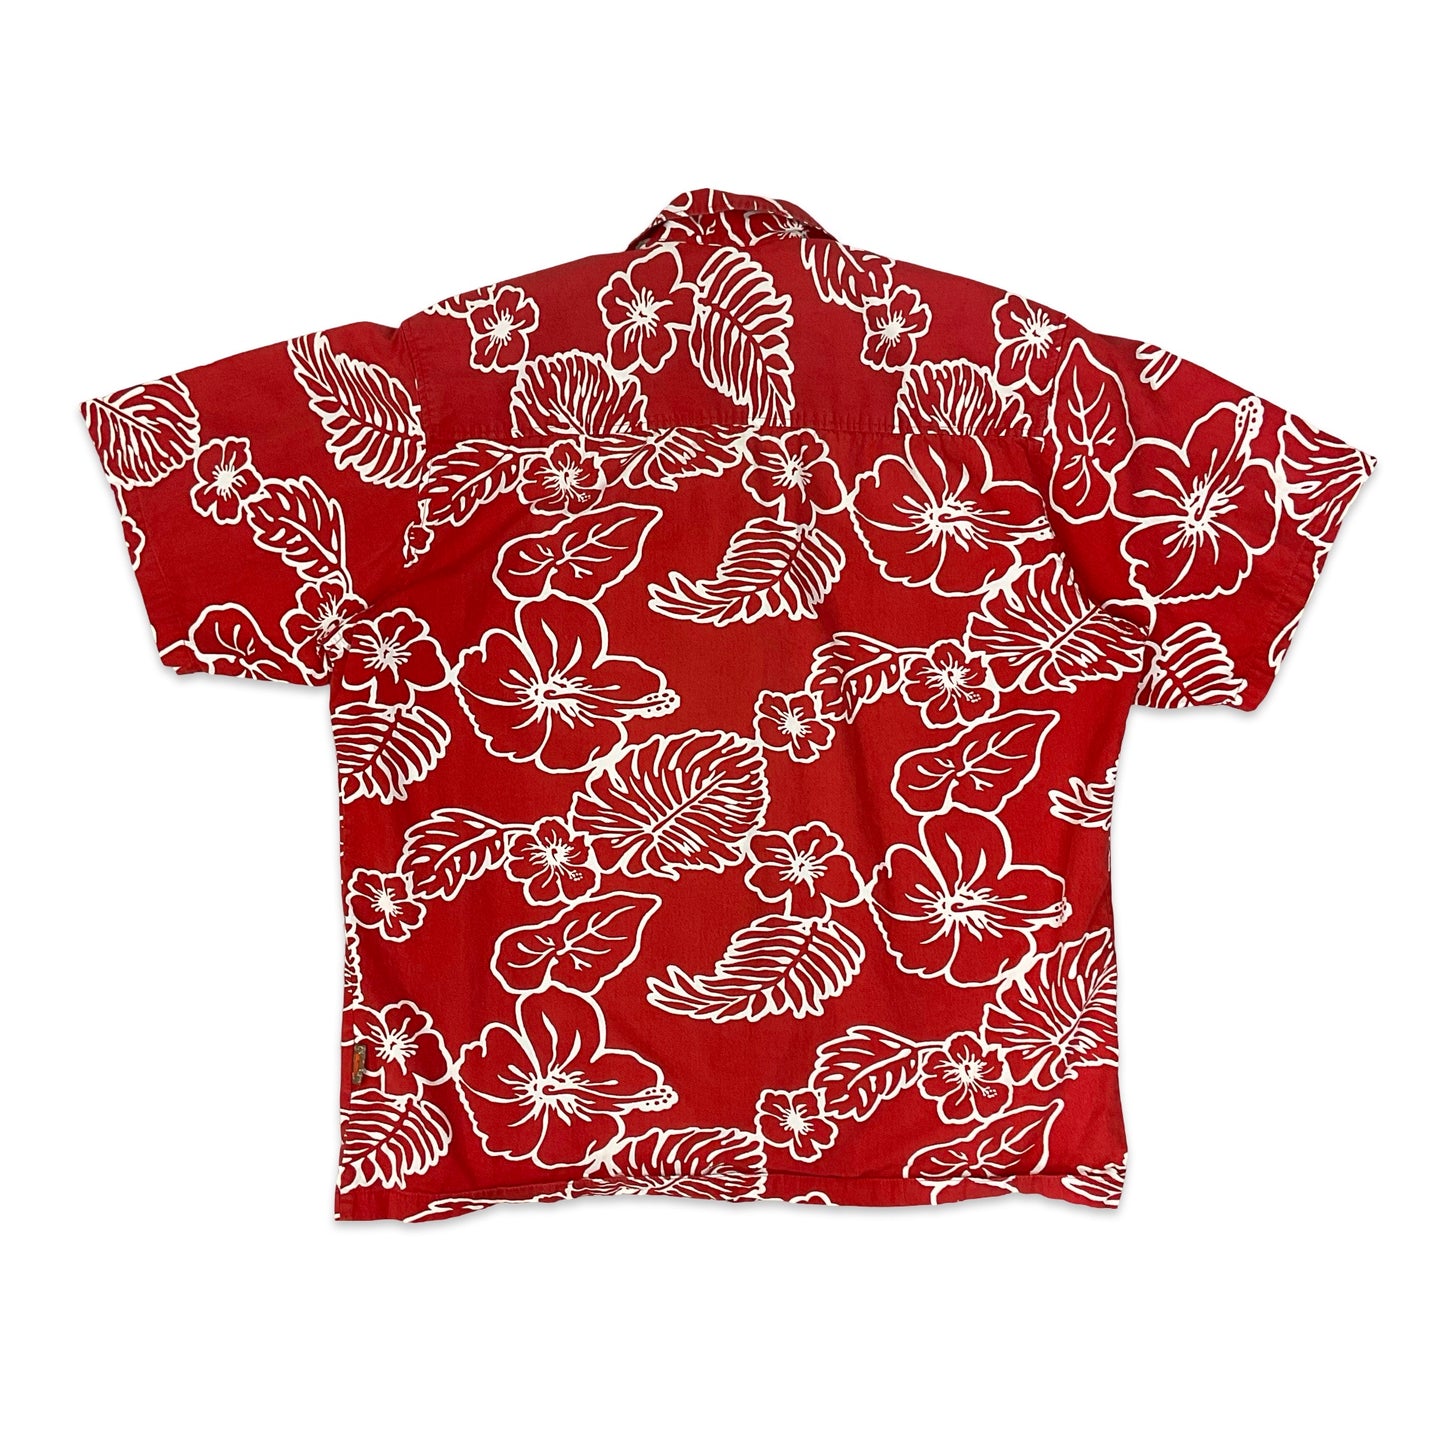 QuikSilver Red & White Floral Print Shirt L XL